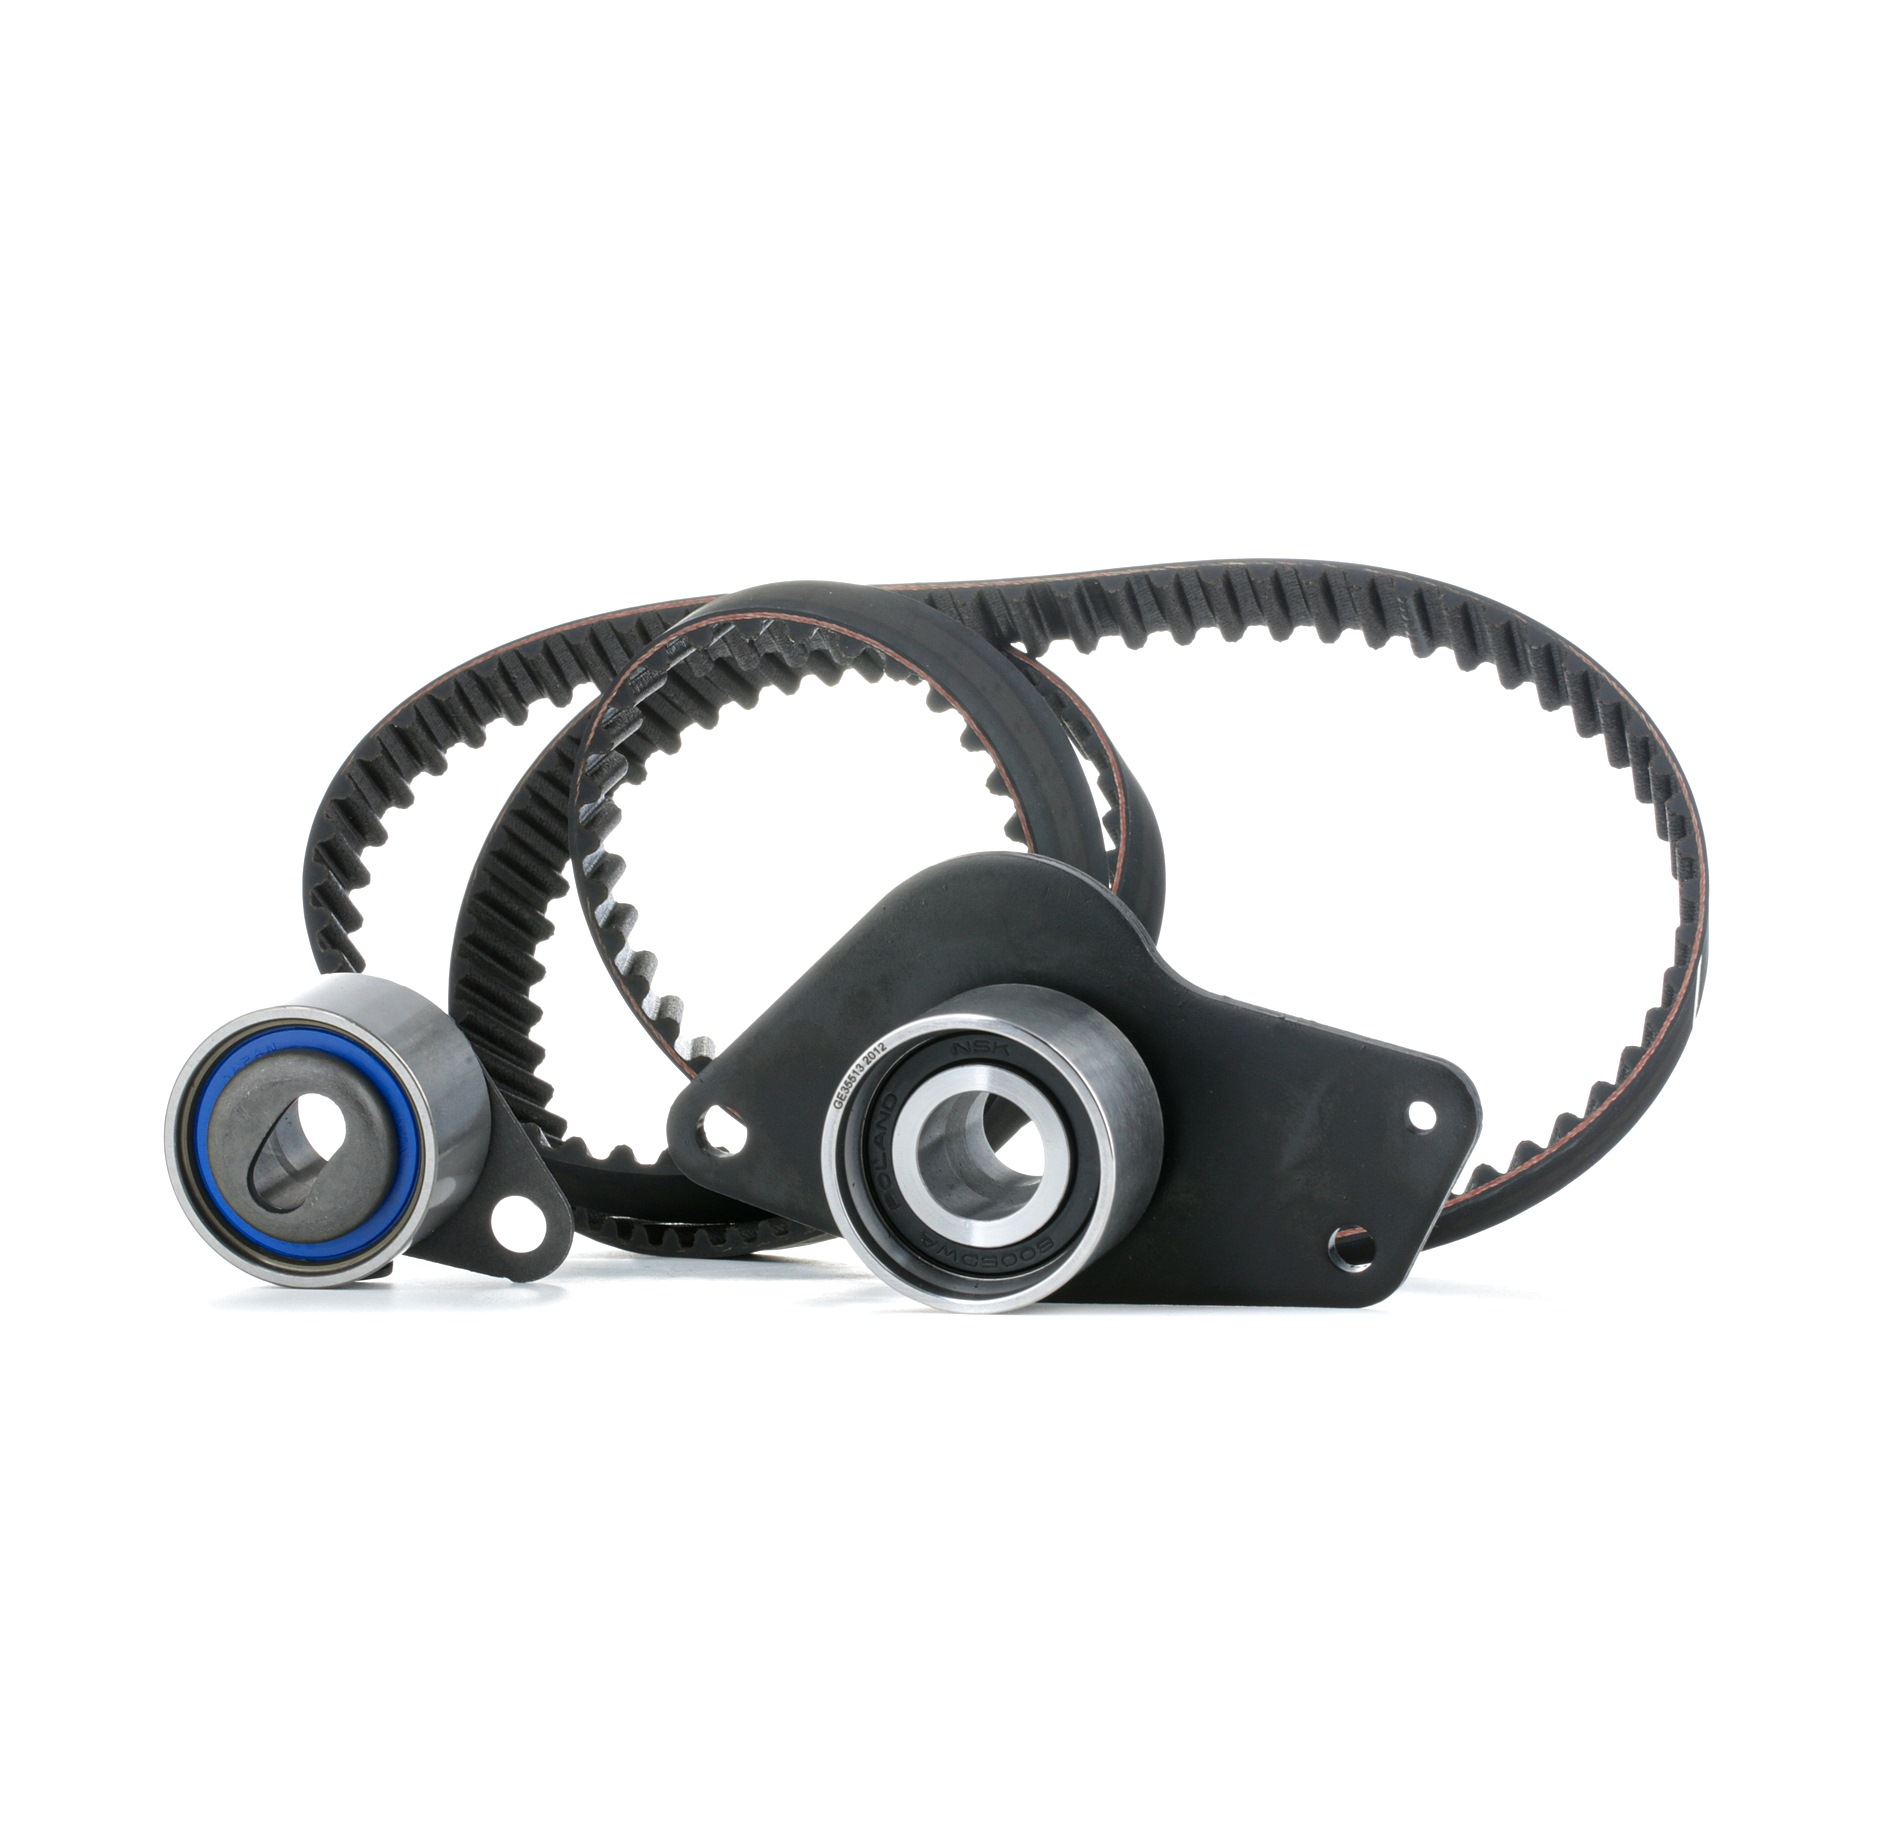 Dacia SOLENZA Timing belt kit SNR KD455.37 cheap